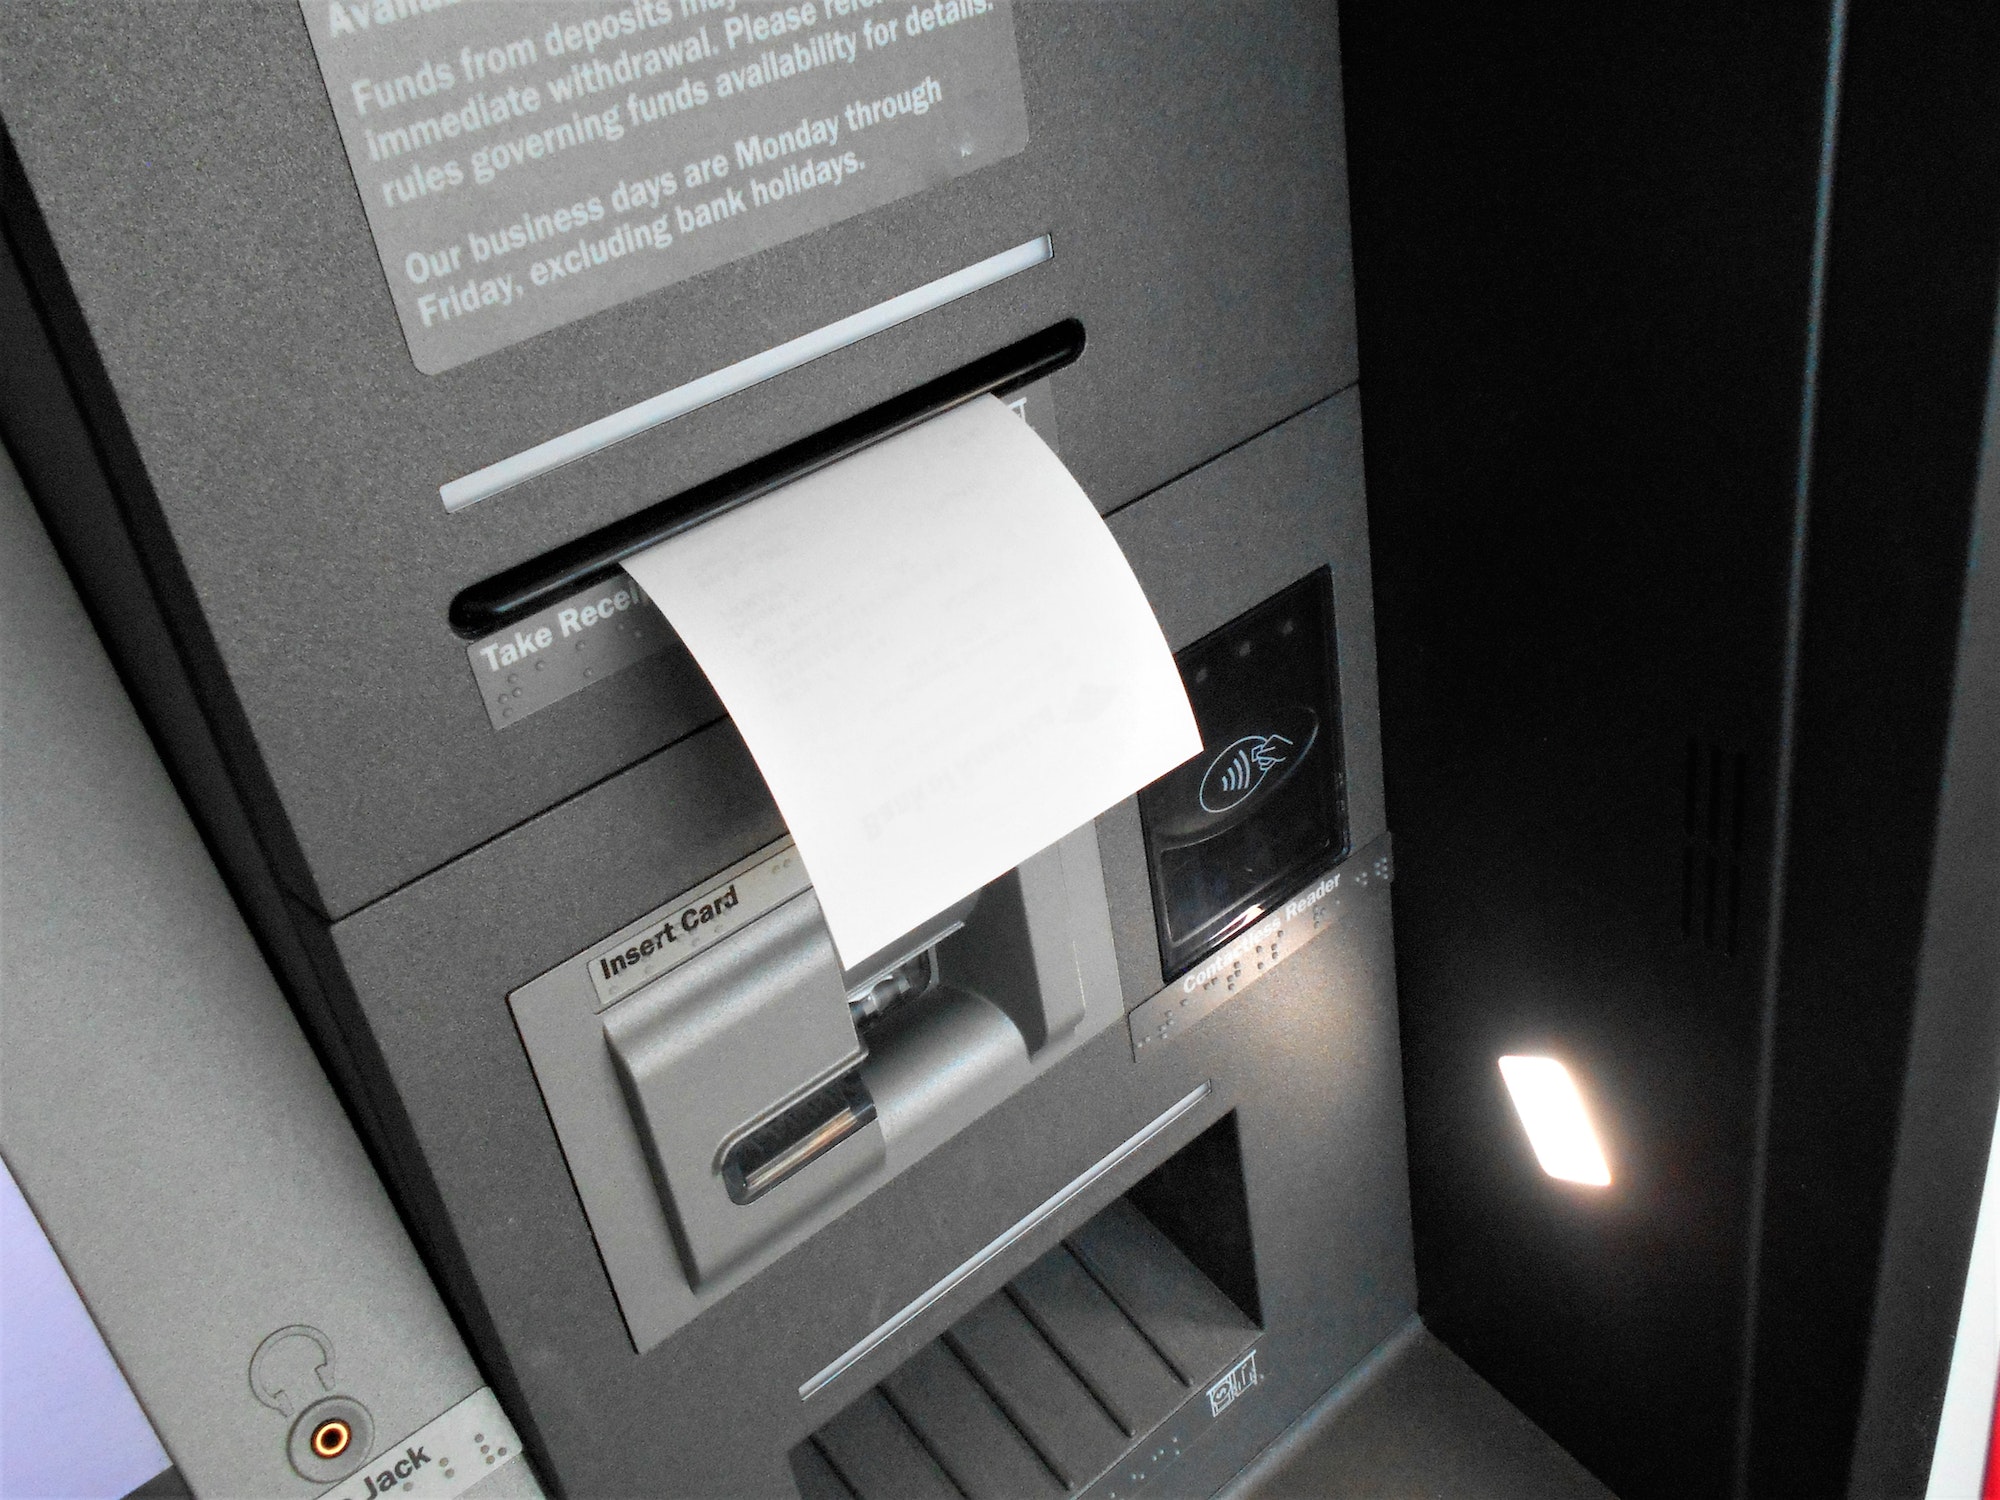 ATM Receipt! ATM Banking!